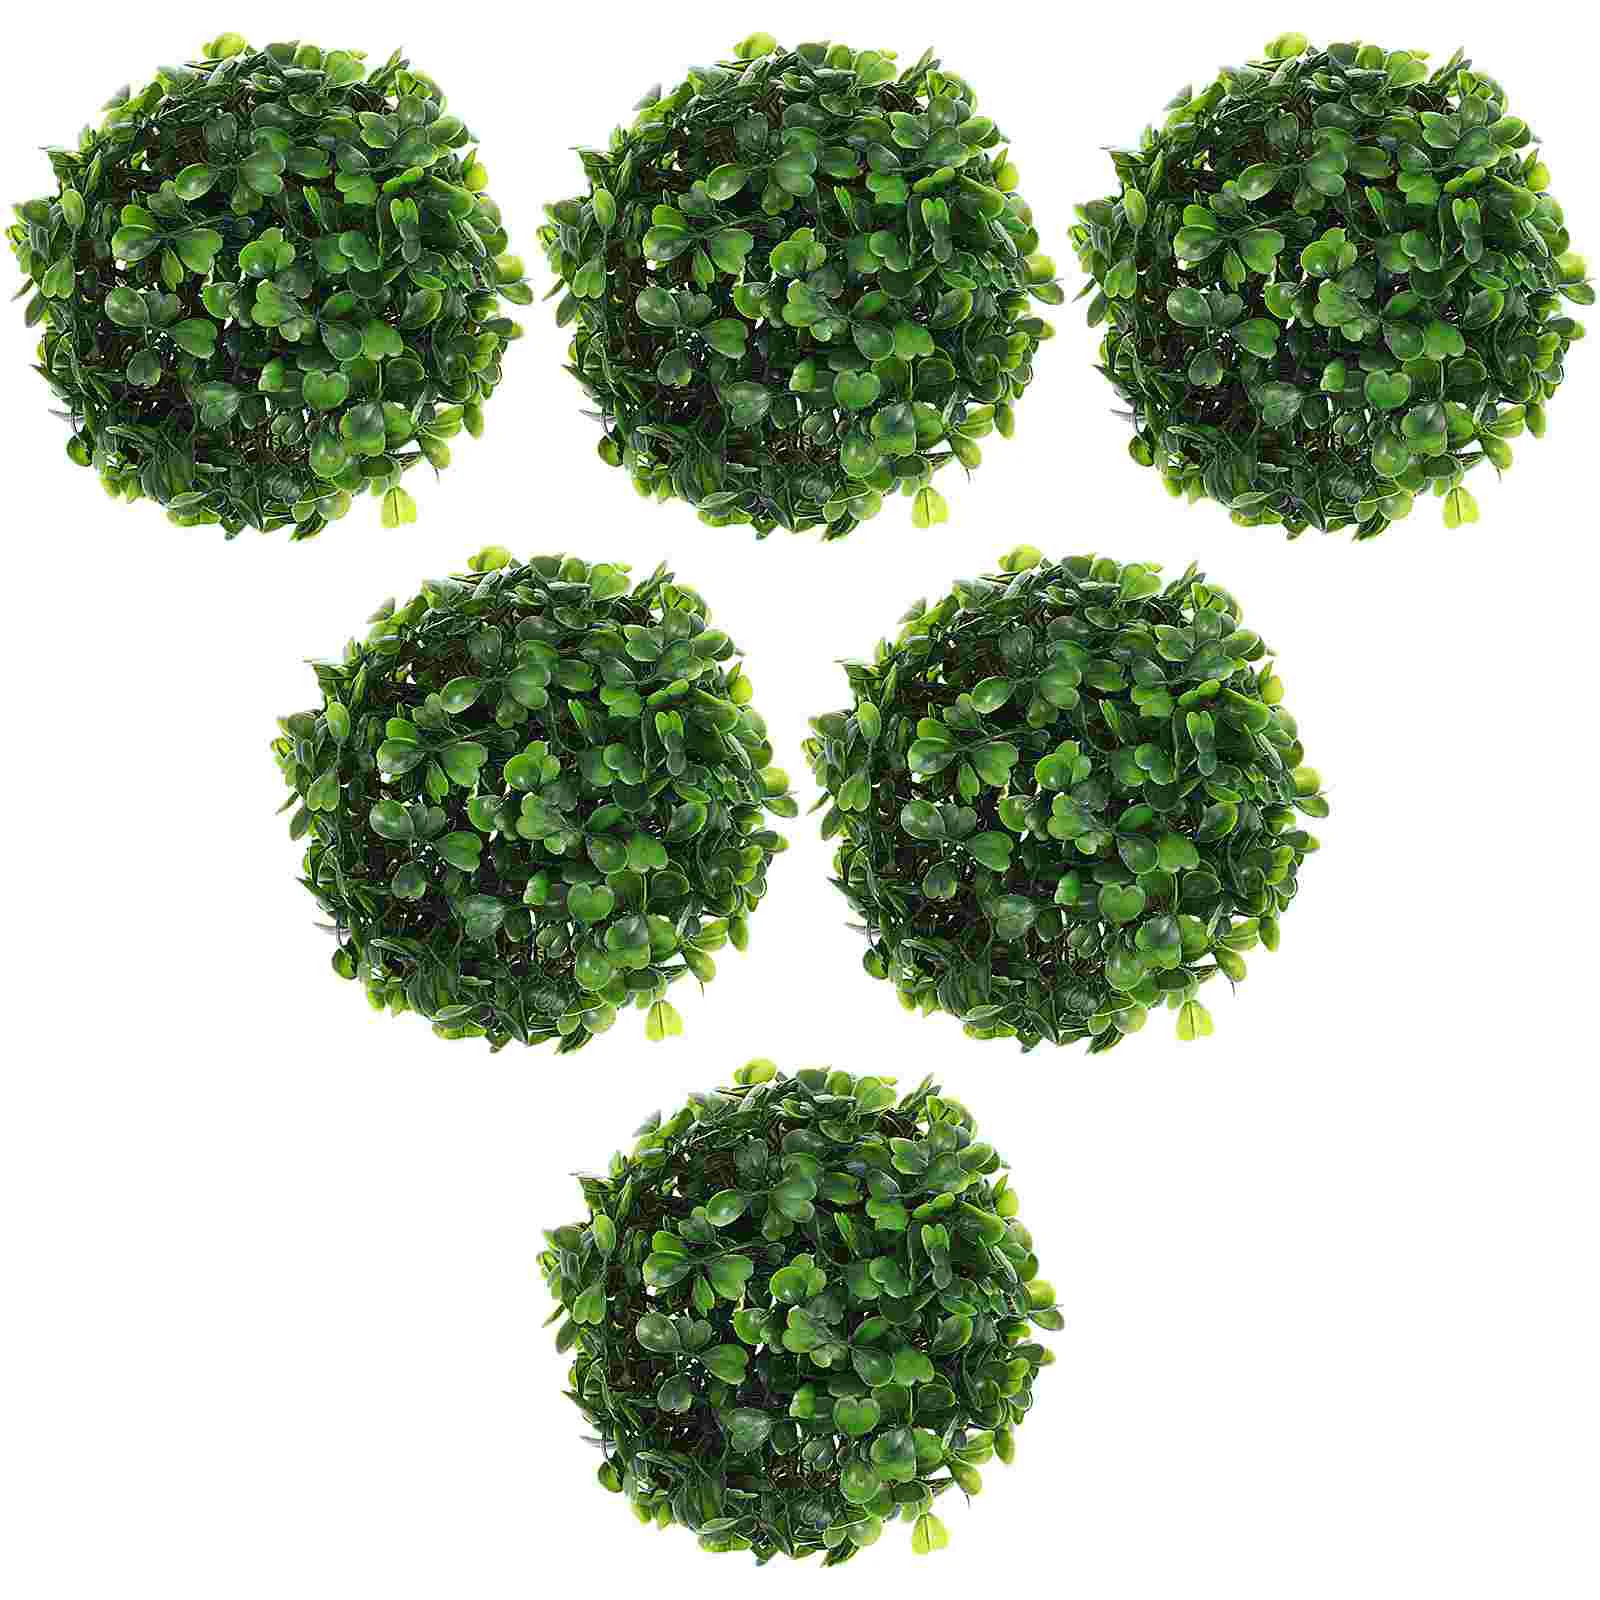 

6 Pcs Substitute Artificial Flowers Topiary Ball Ornament Creative Grass Balls Decor